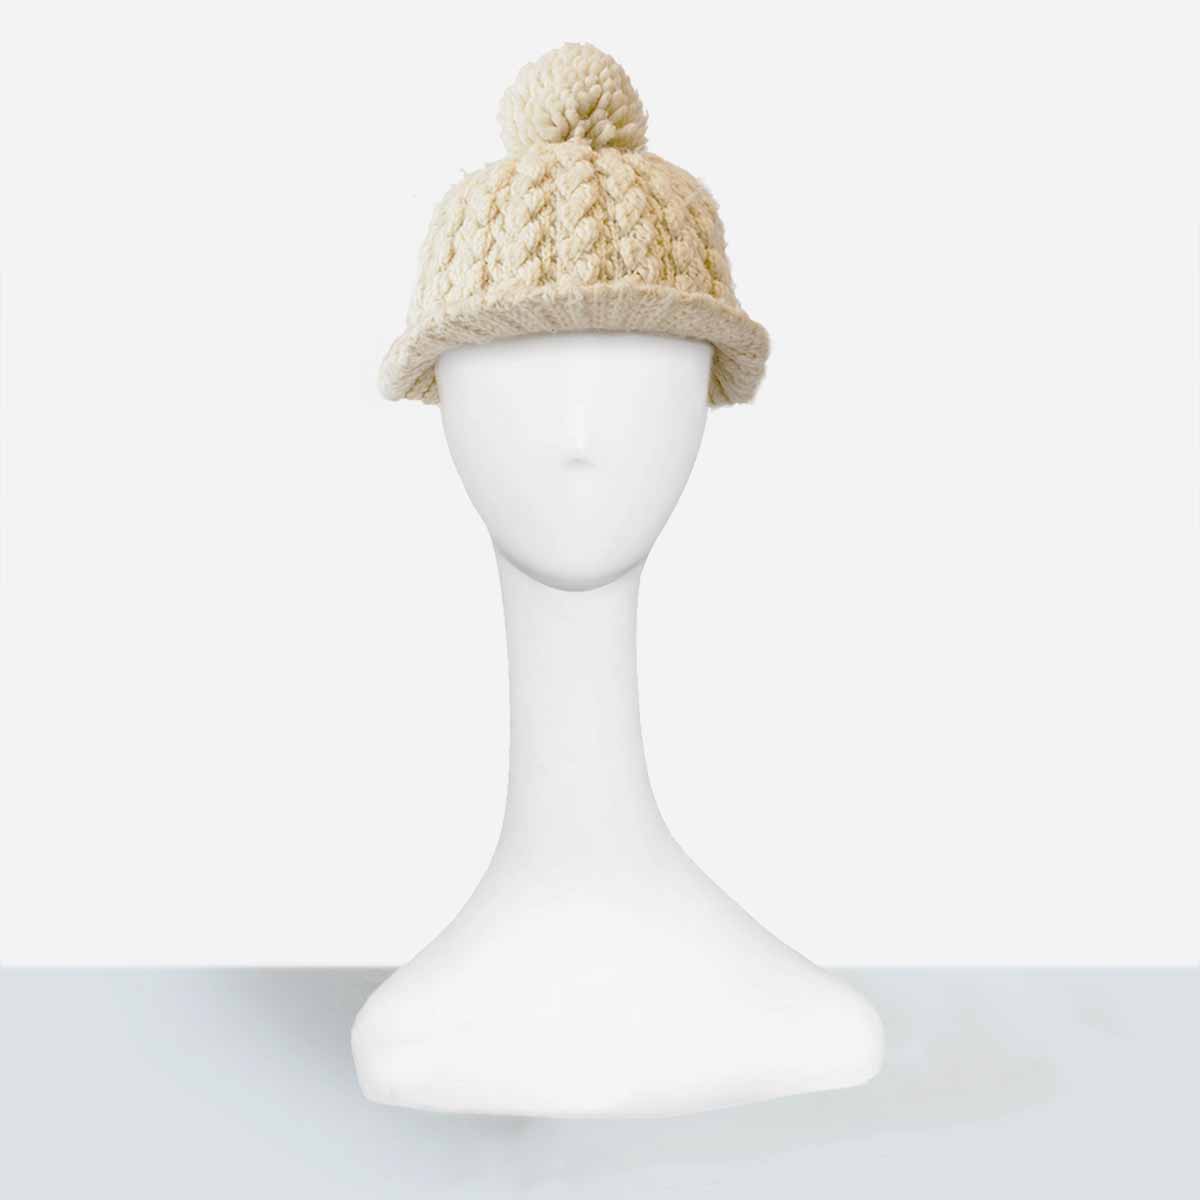 Hansen cable knit winter cap